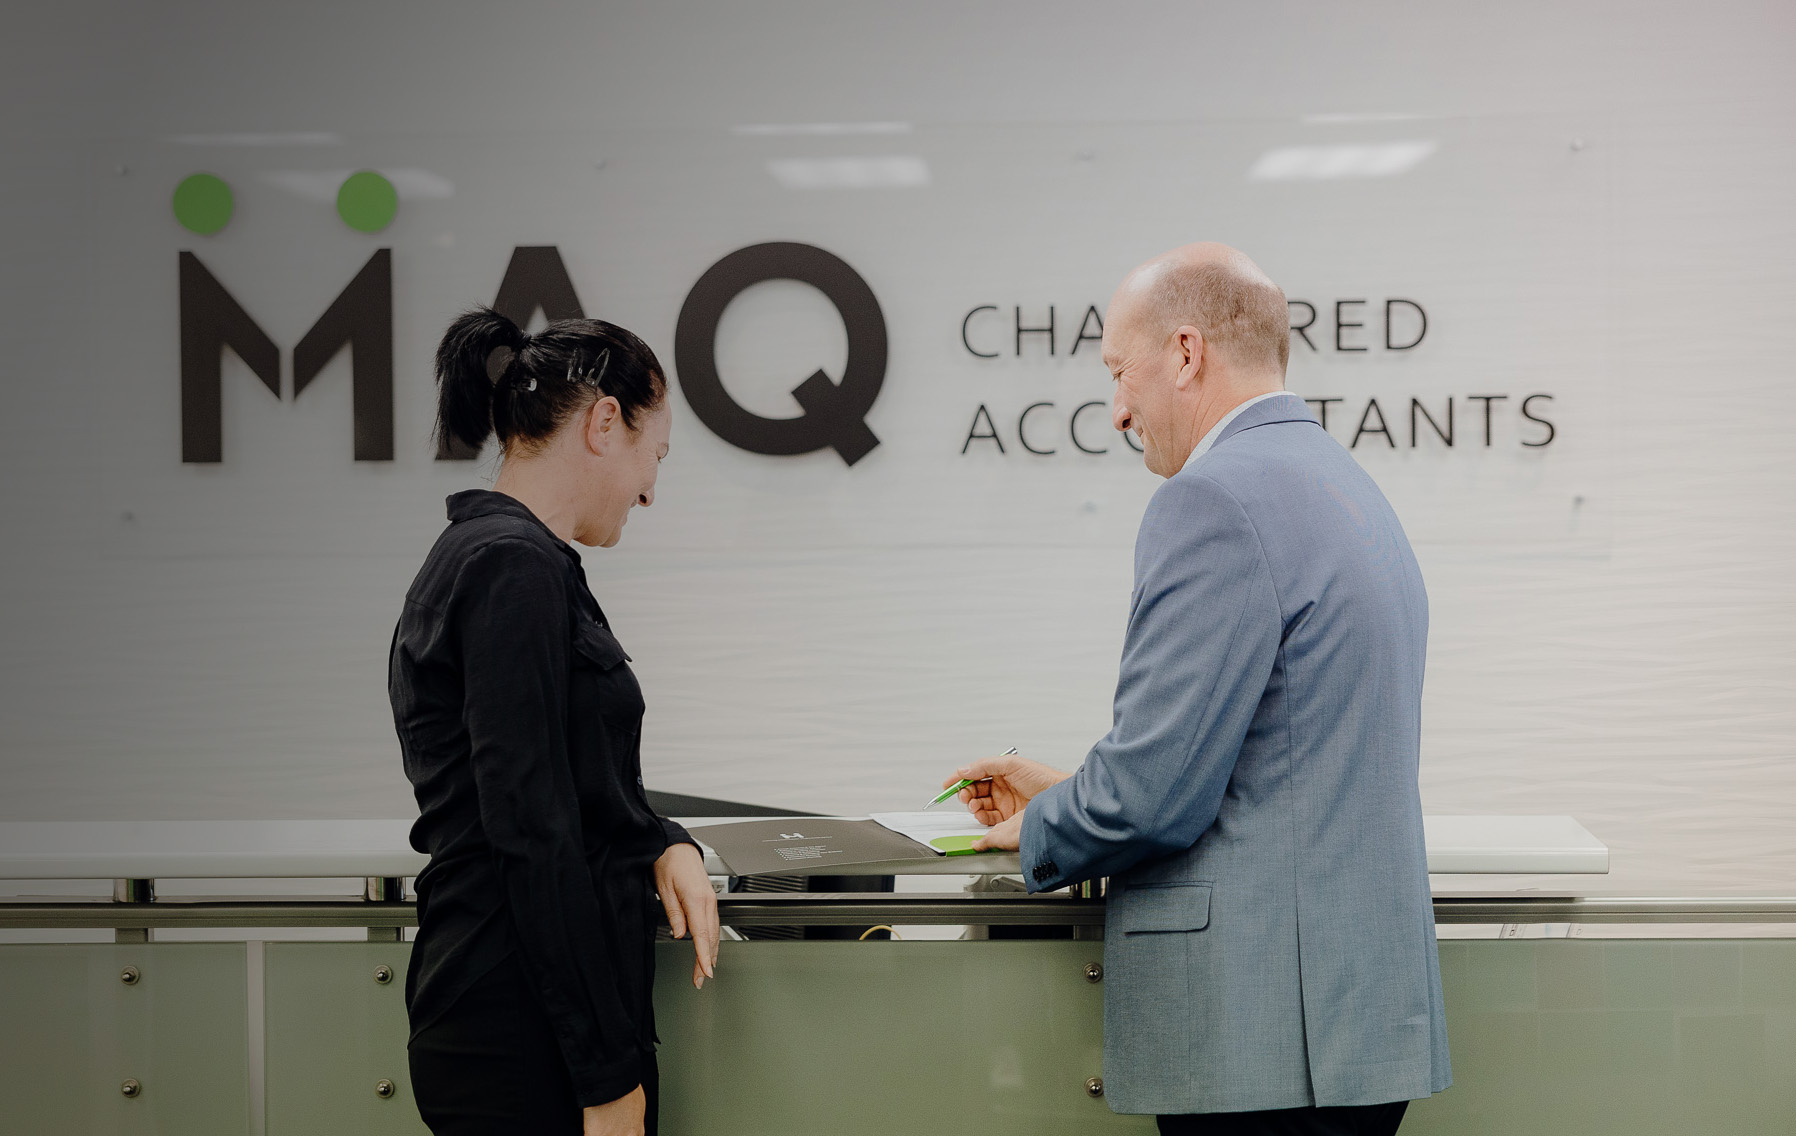 MAQ Chartered Accountants